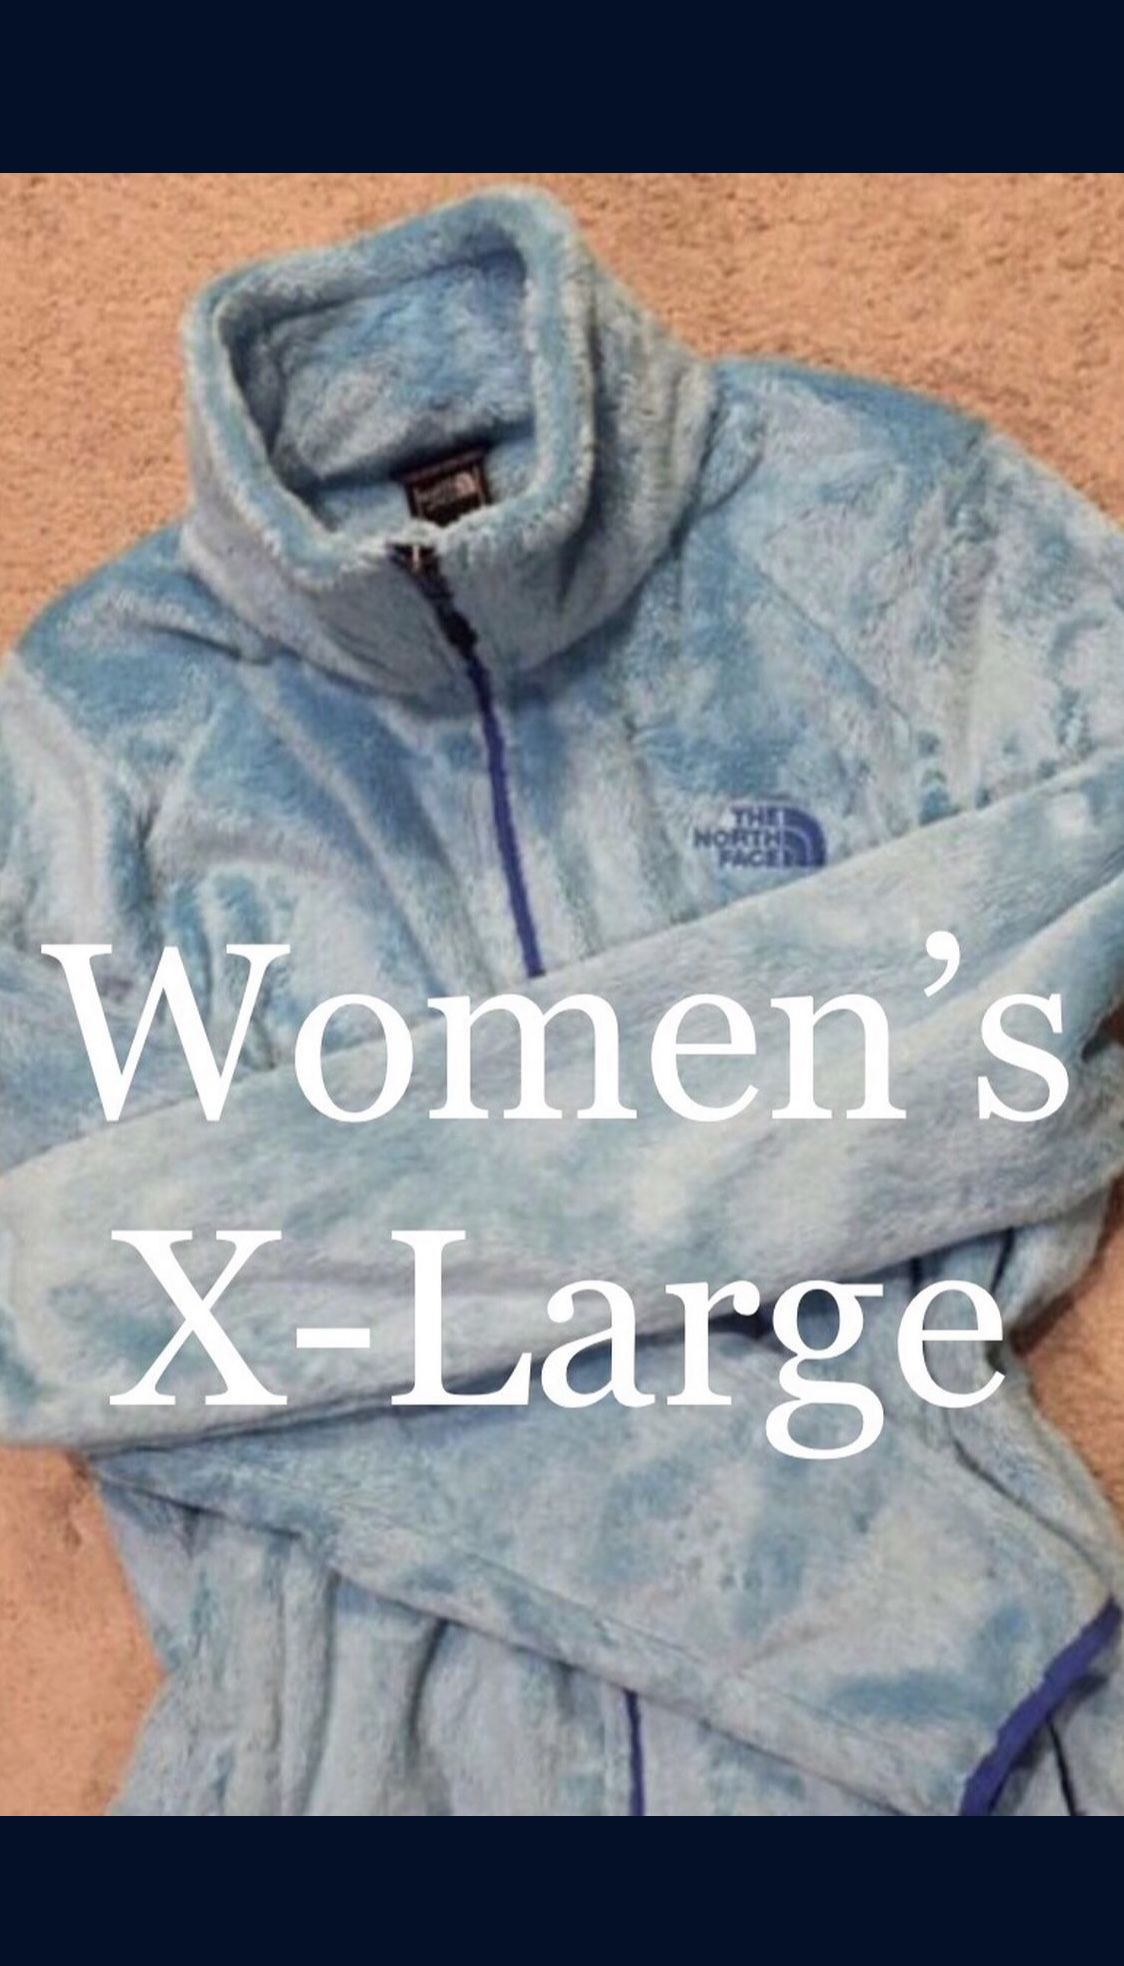 North Face / Soft Cozy Fuzzy Fleece Sweatshirt Jacket Coat / SIZE: Women's X-Large / Brand New w/o Tags! / Baby Blue Dream